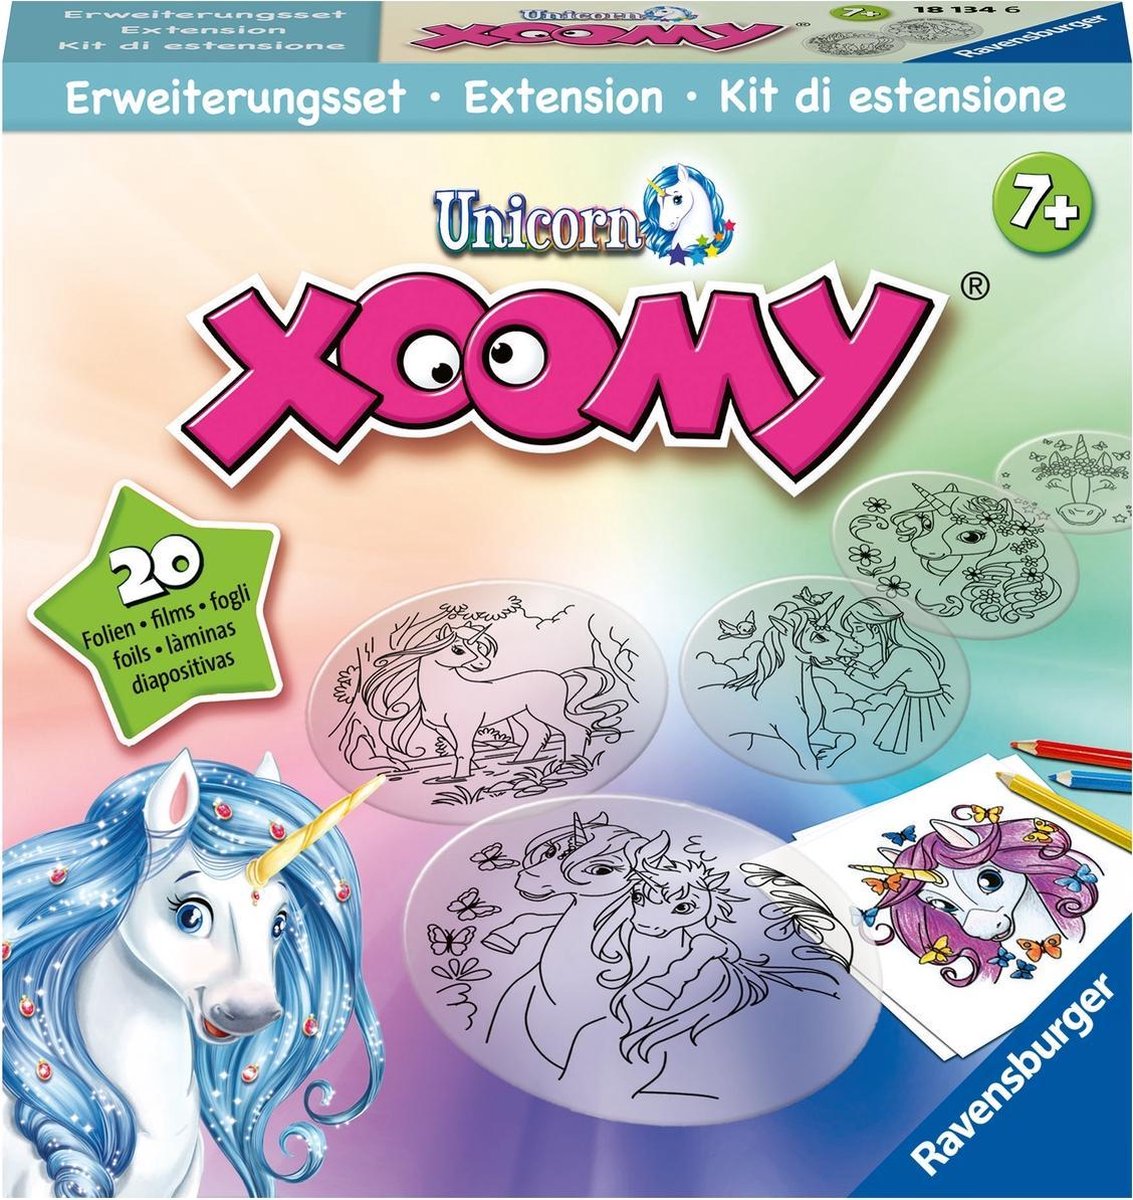 Ravensburger Xoomy® uitbreidingsset Unicorn